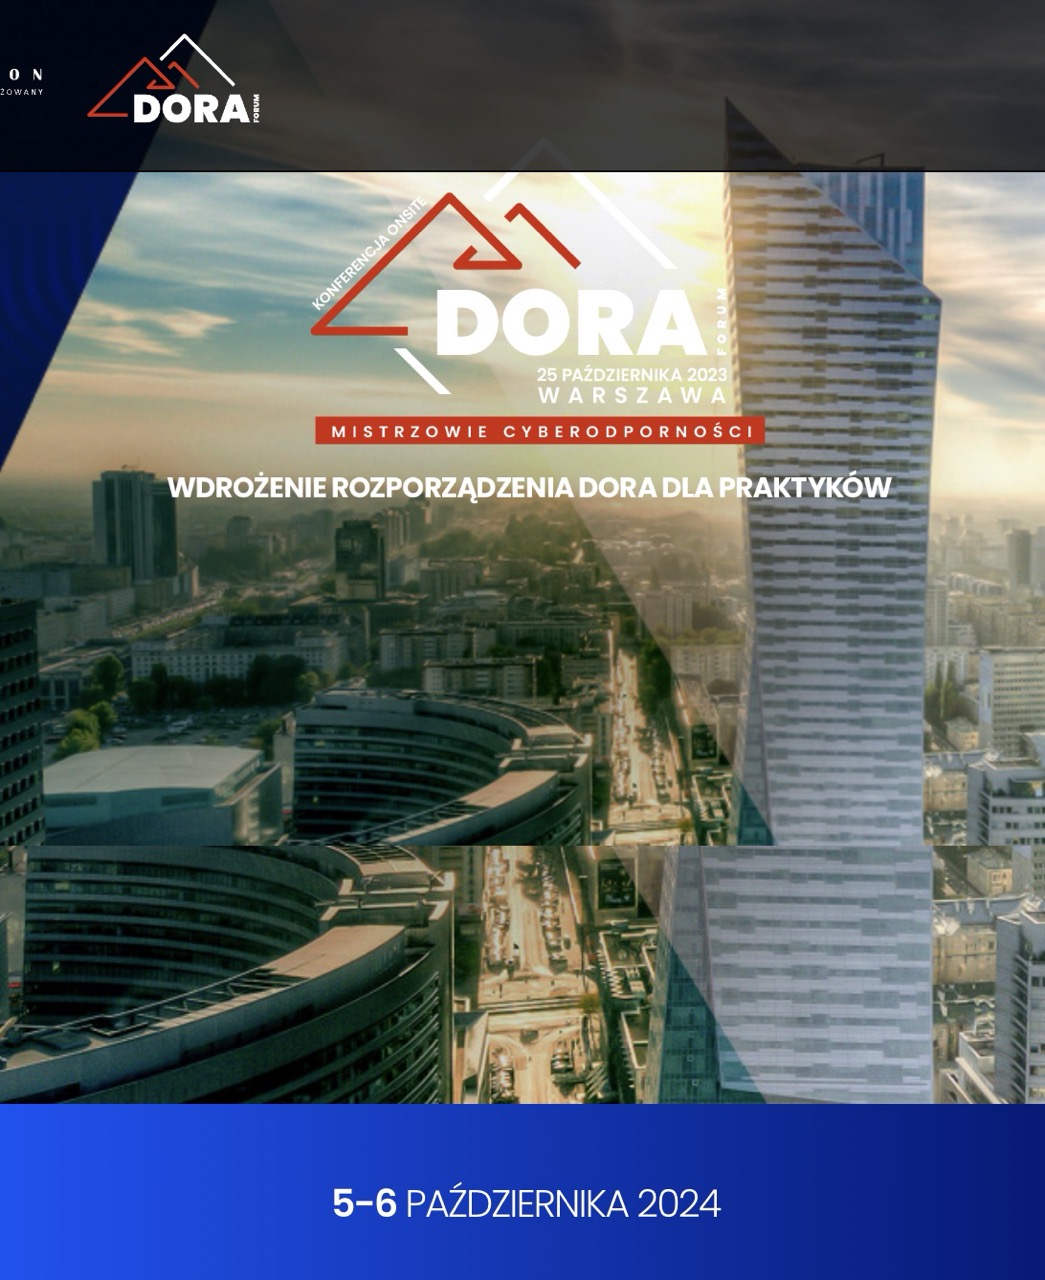 DORA Forum 2024